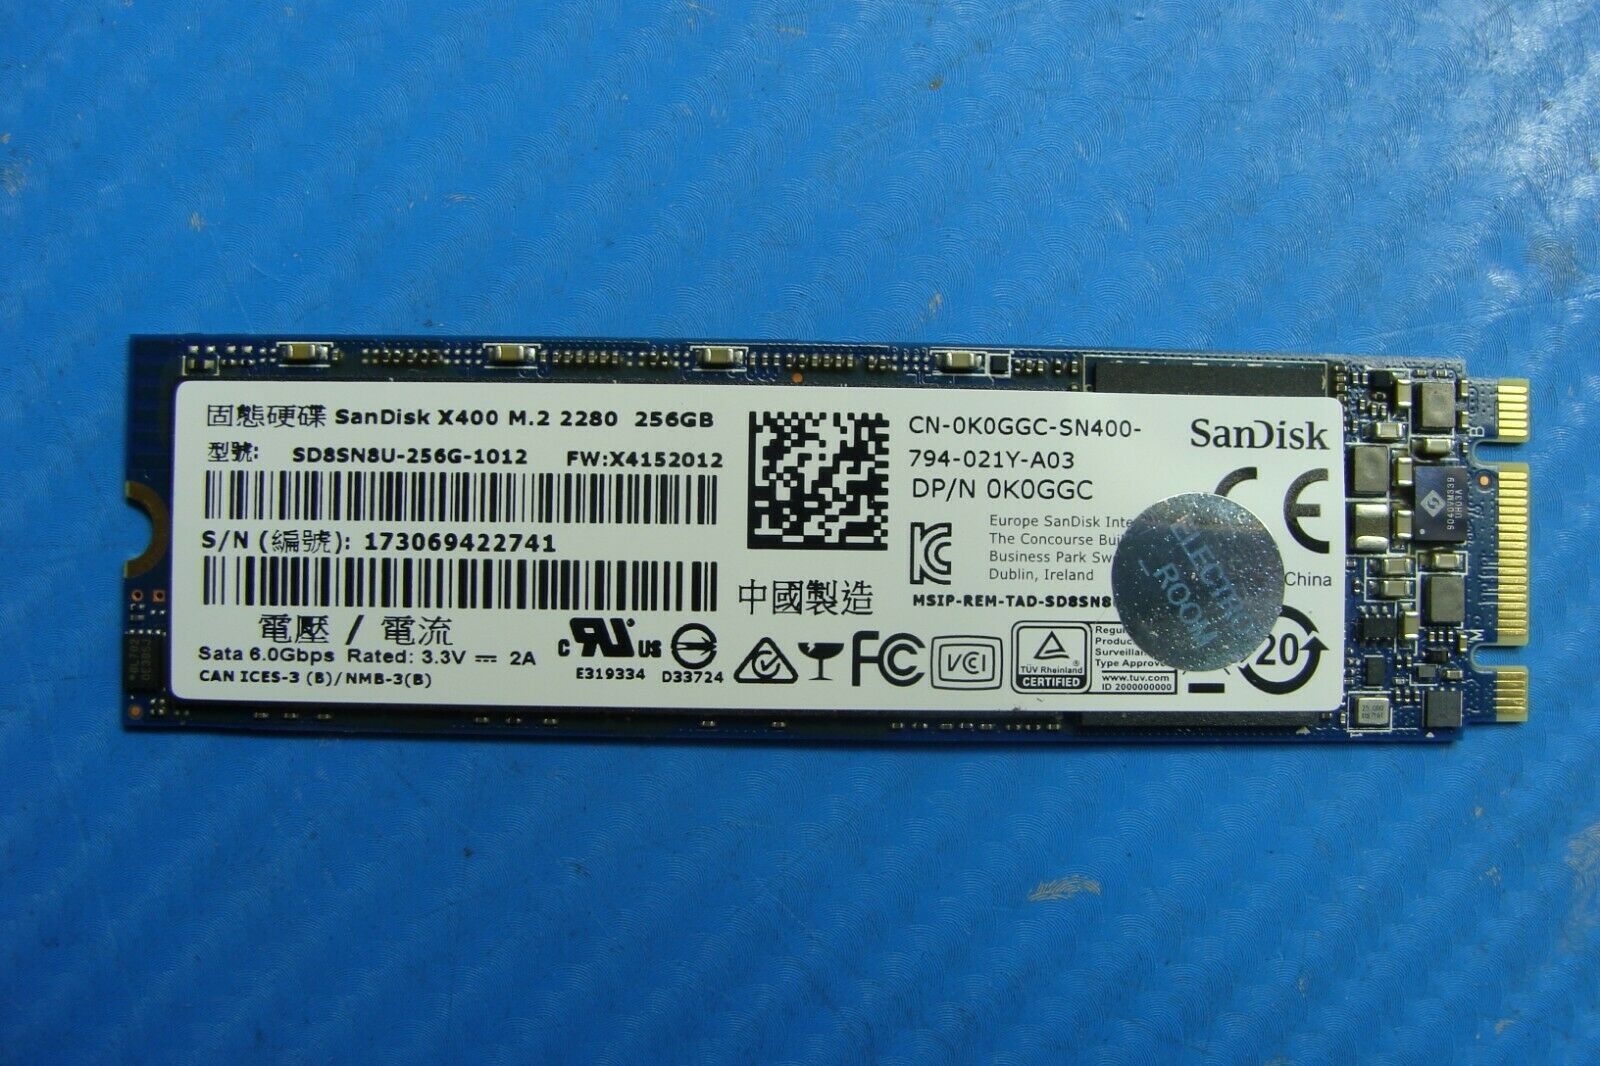 Dell 7373 SanDisk X400 256Gb SataM.2 Solid State Drive k0ggc sd8sn8u-256g-1012 